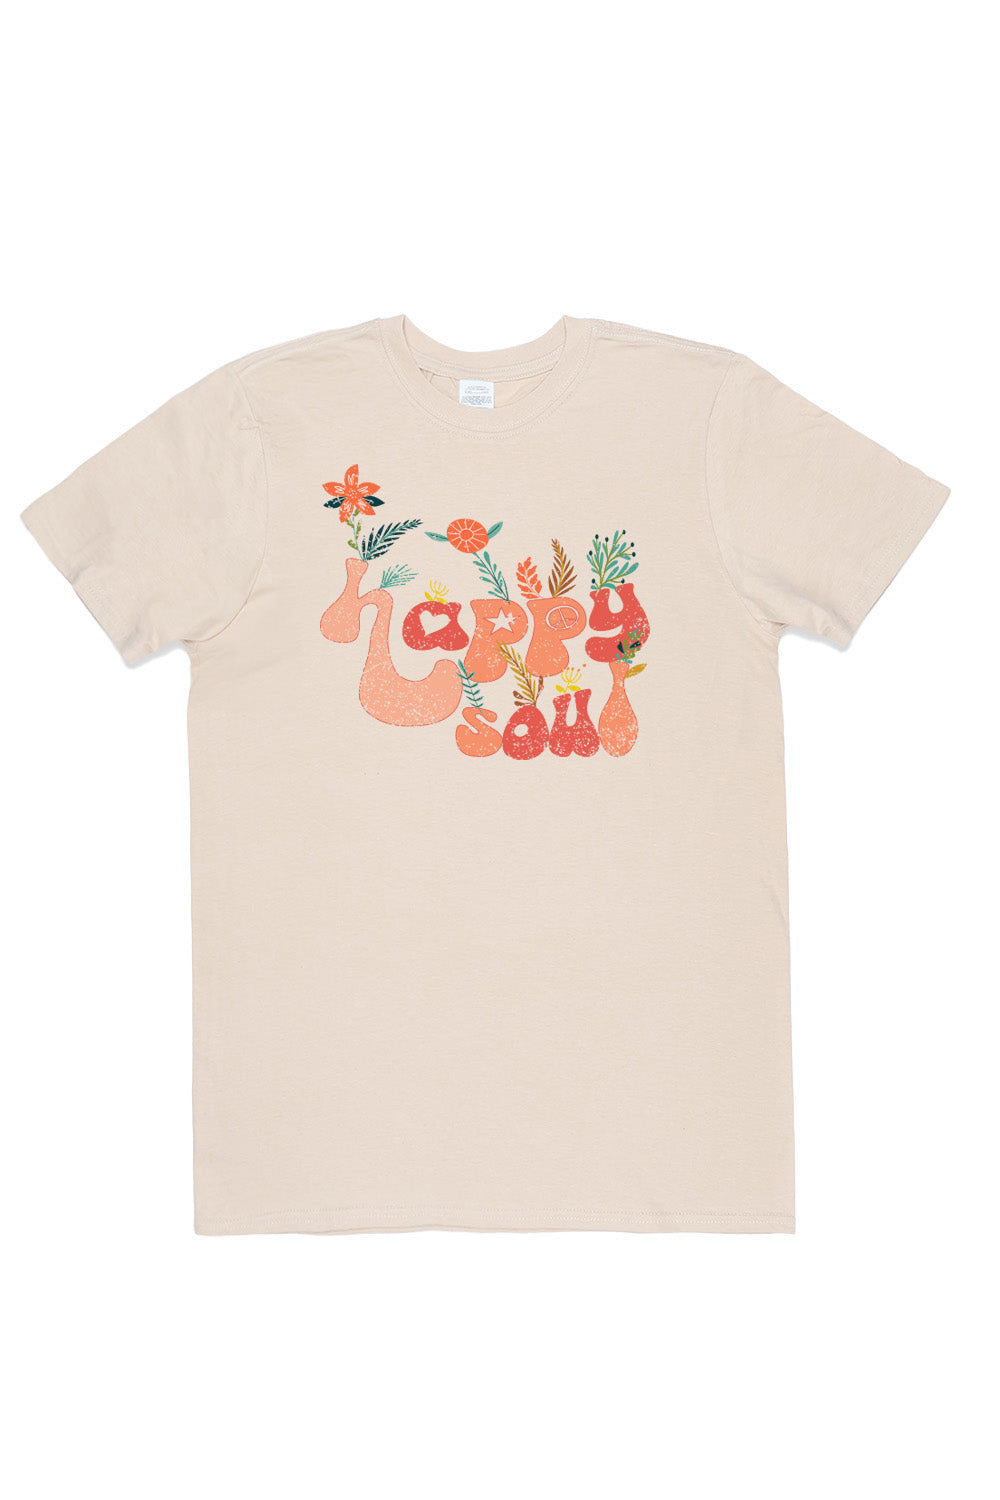 Happy Soul T-Shirt in Sand (Custom Packs)